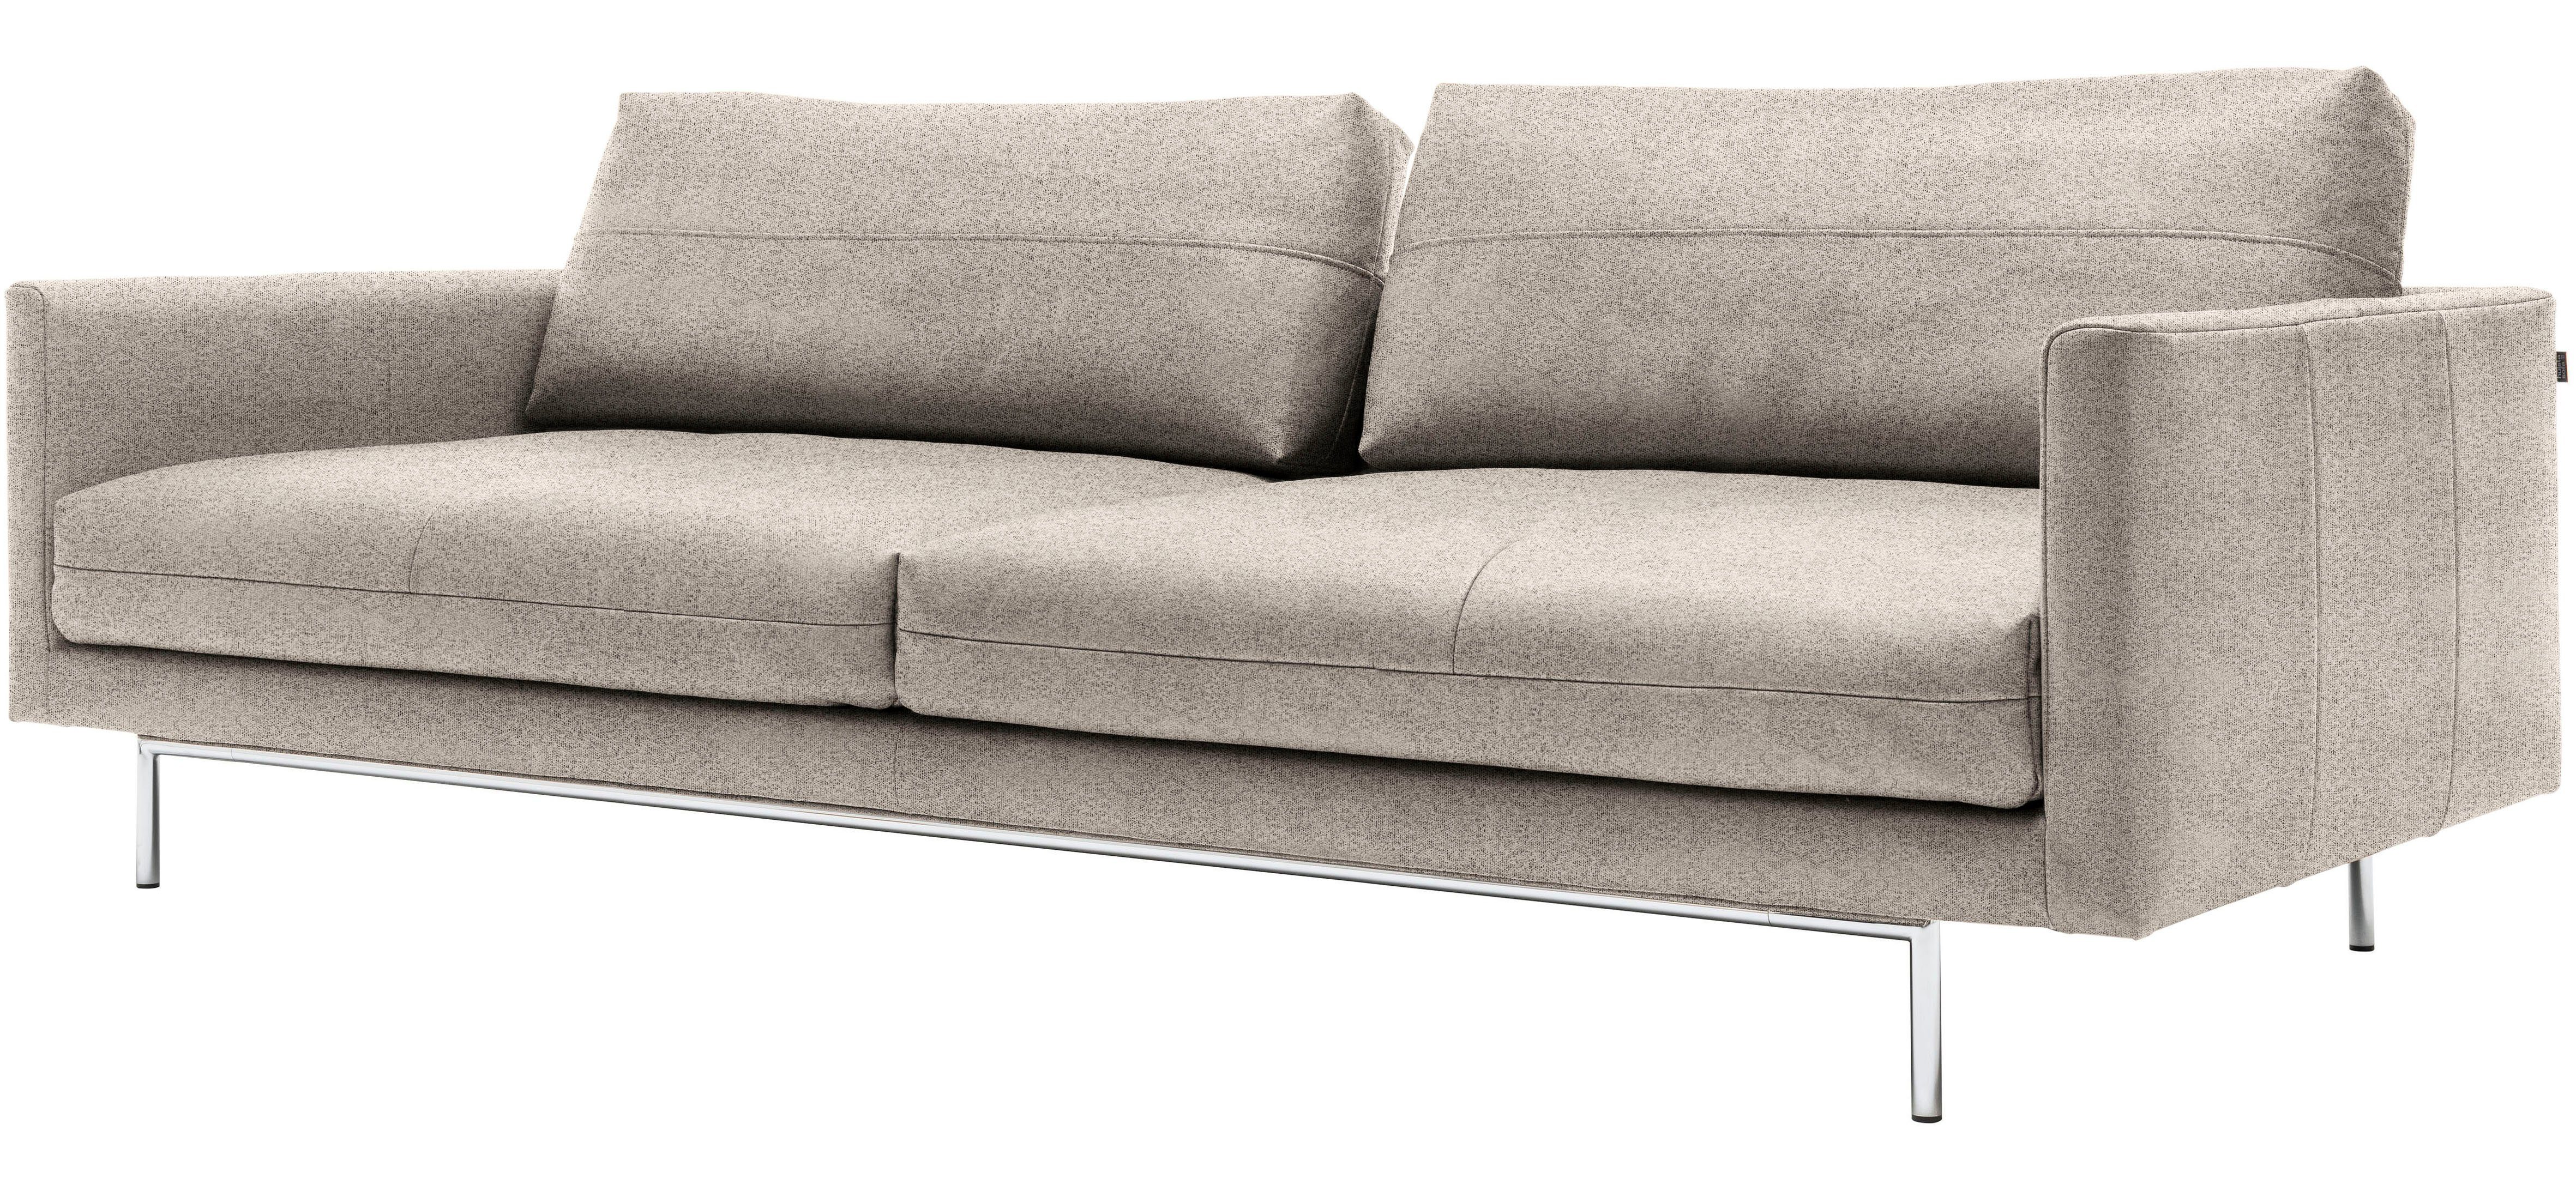 4-Sitzer graubeige sofa grbeige-nat hülsta /natur |